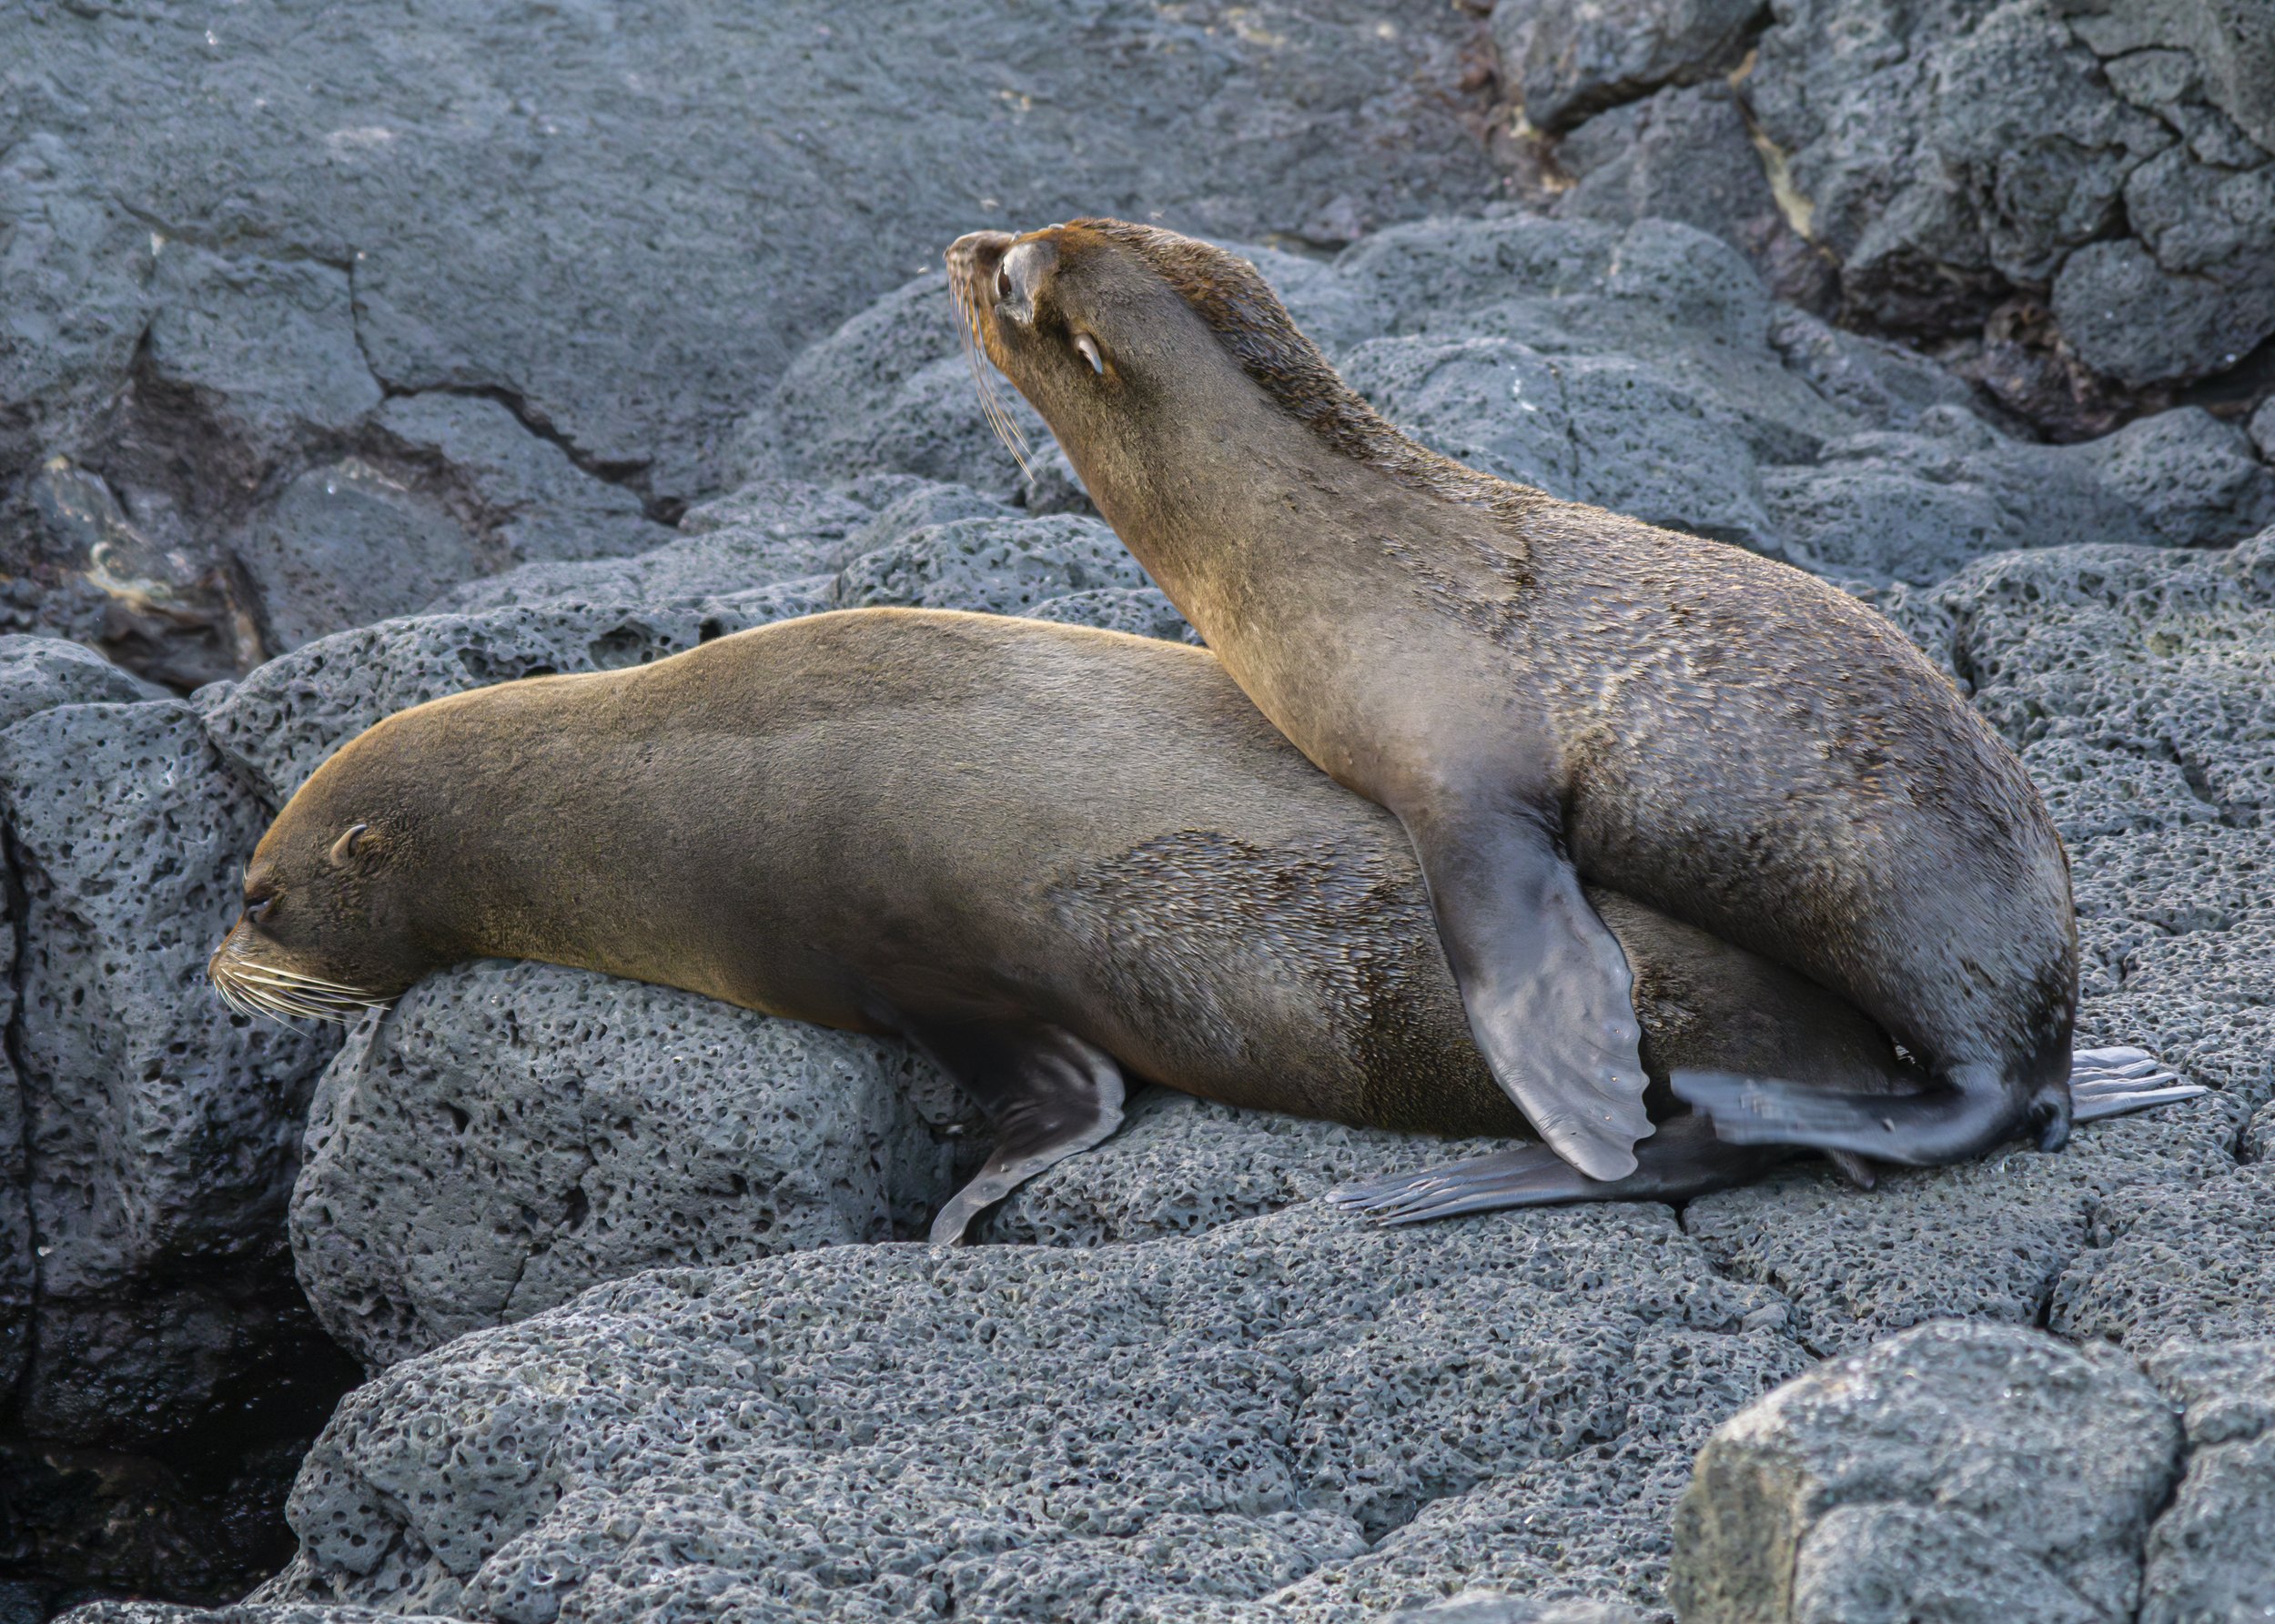 Mom anf Baby Fur Seal